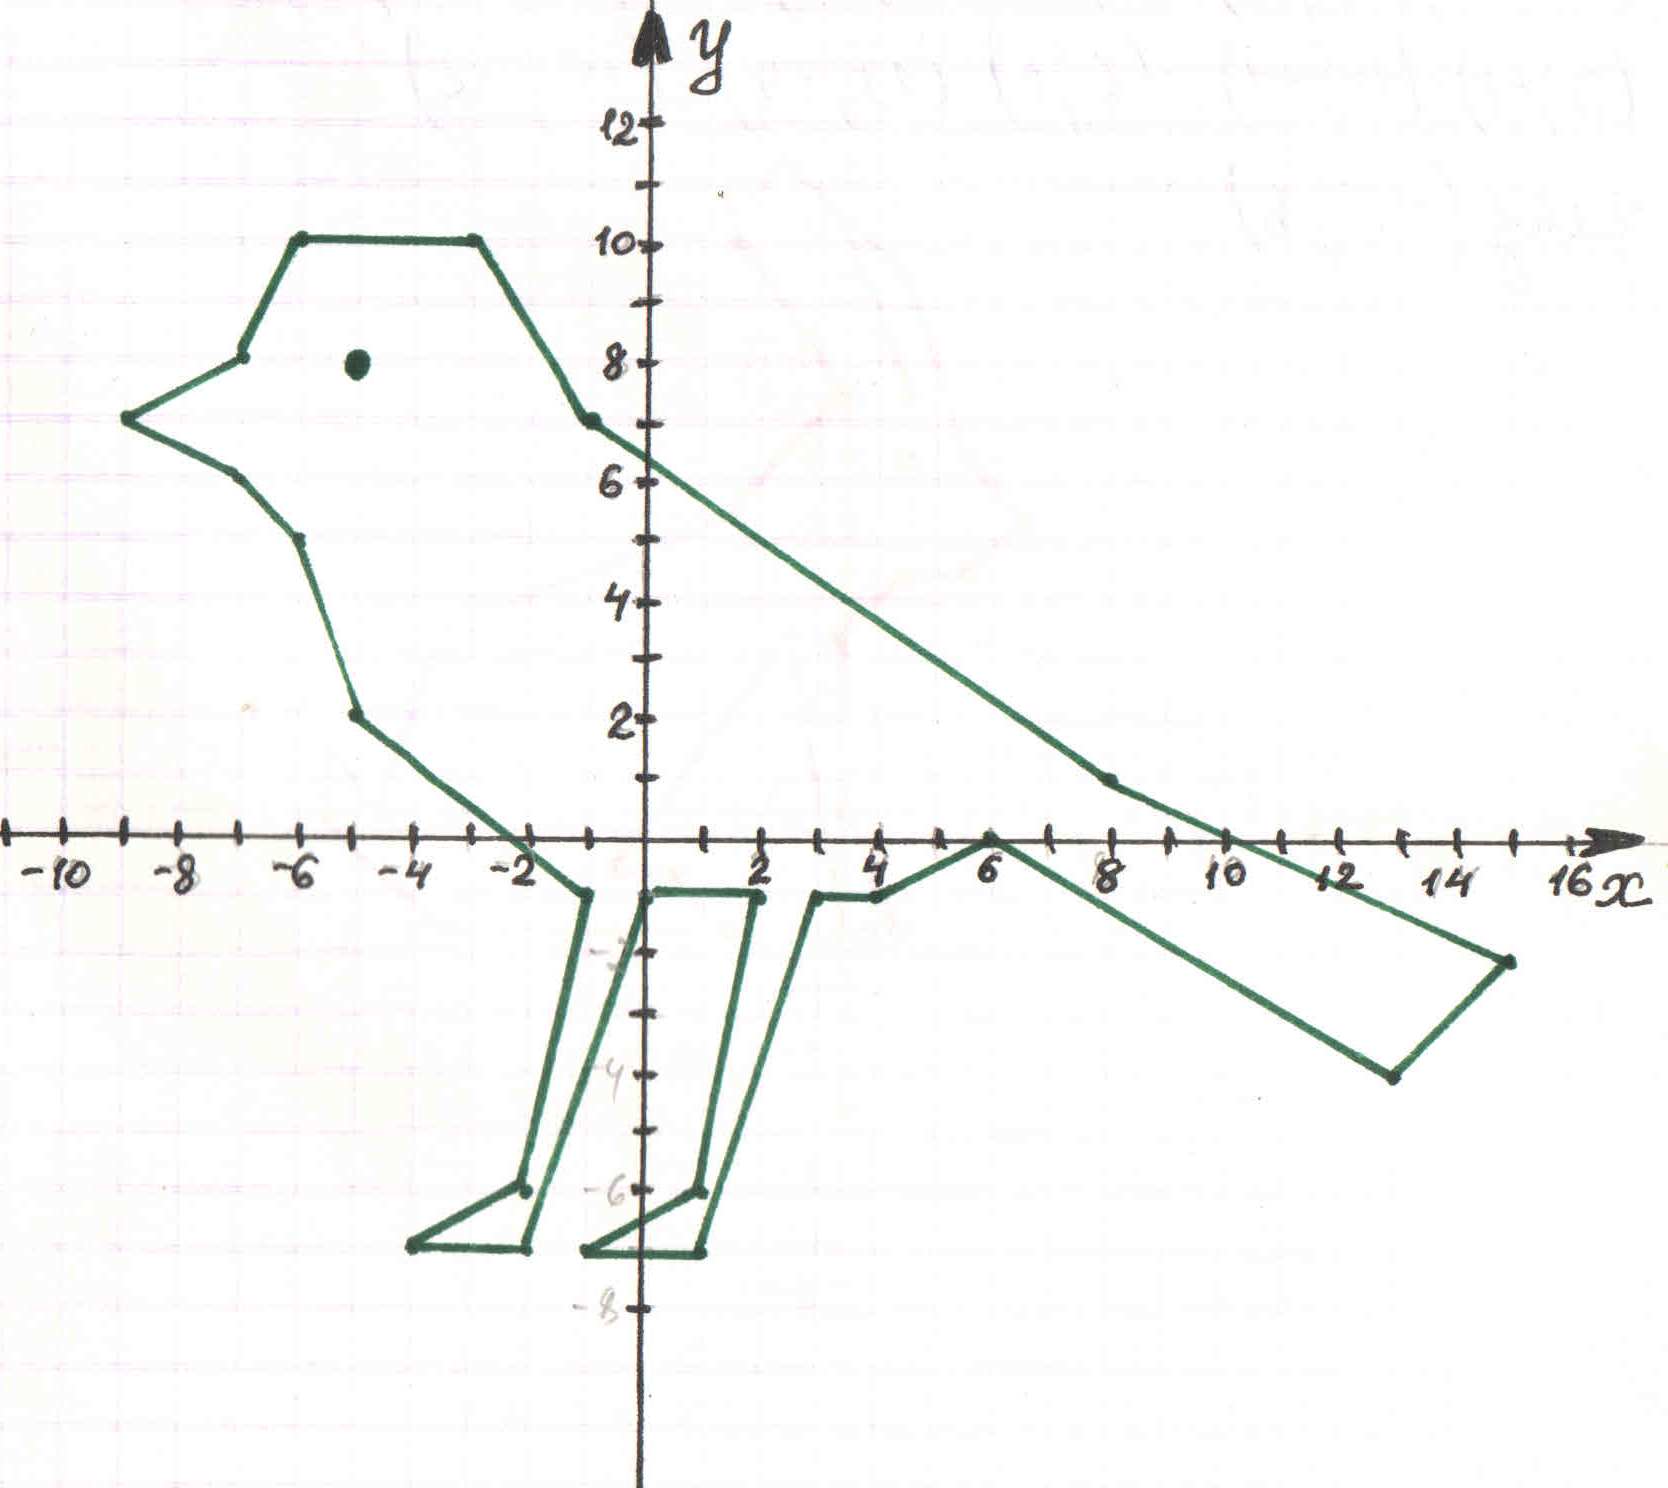 69 1 7 8. Декартова система координат на плоскости рисунки животных. Рисунок по координатам (0;8) (2,5;3,5) (7,5; 2,5). Декартова система координат на плоскости рисунок собака. Координатные плоскости (-9,5;-2,5) (-6;3) (0; 4).